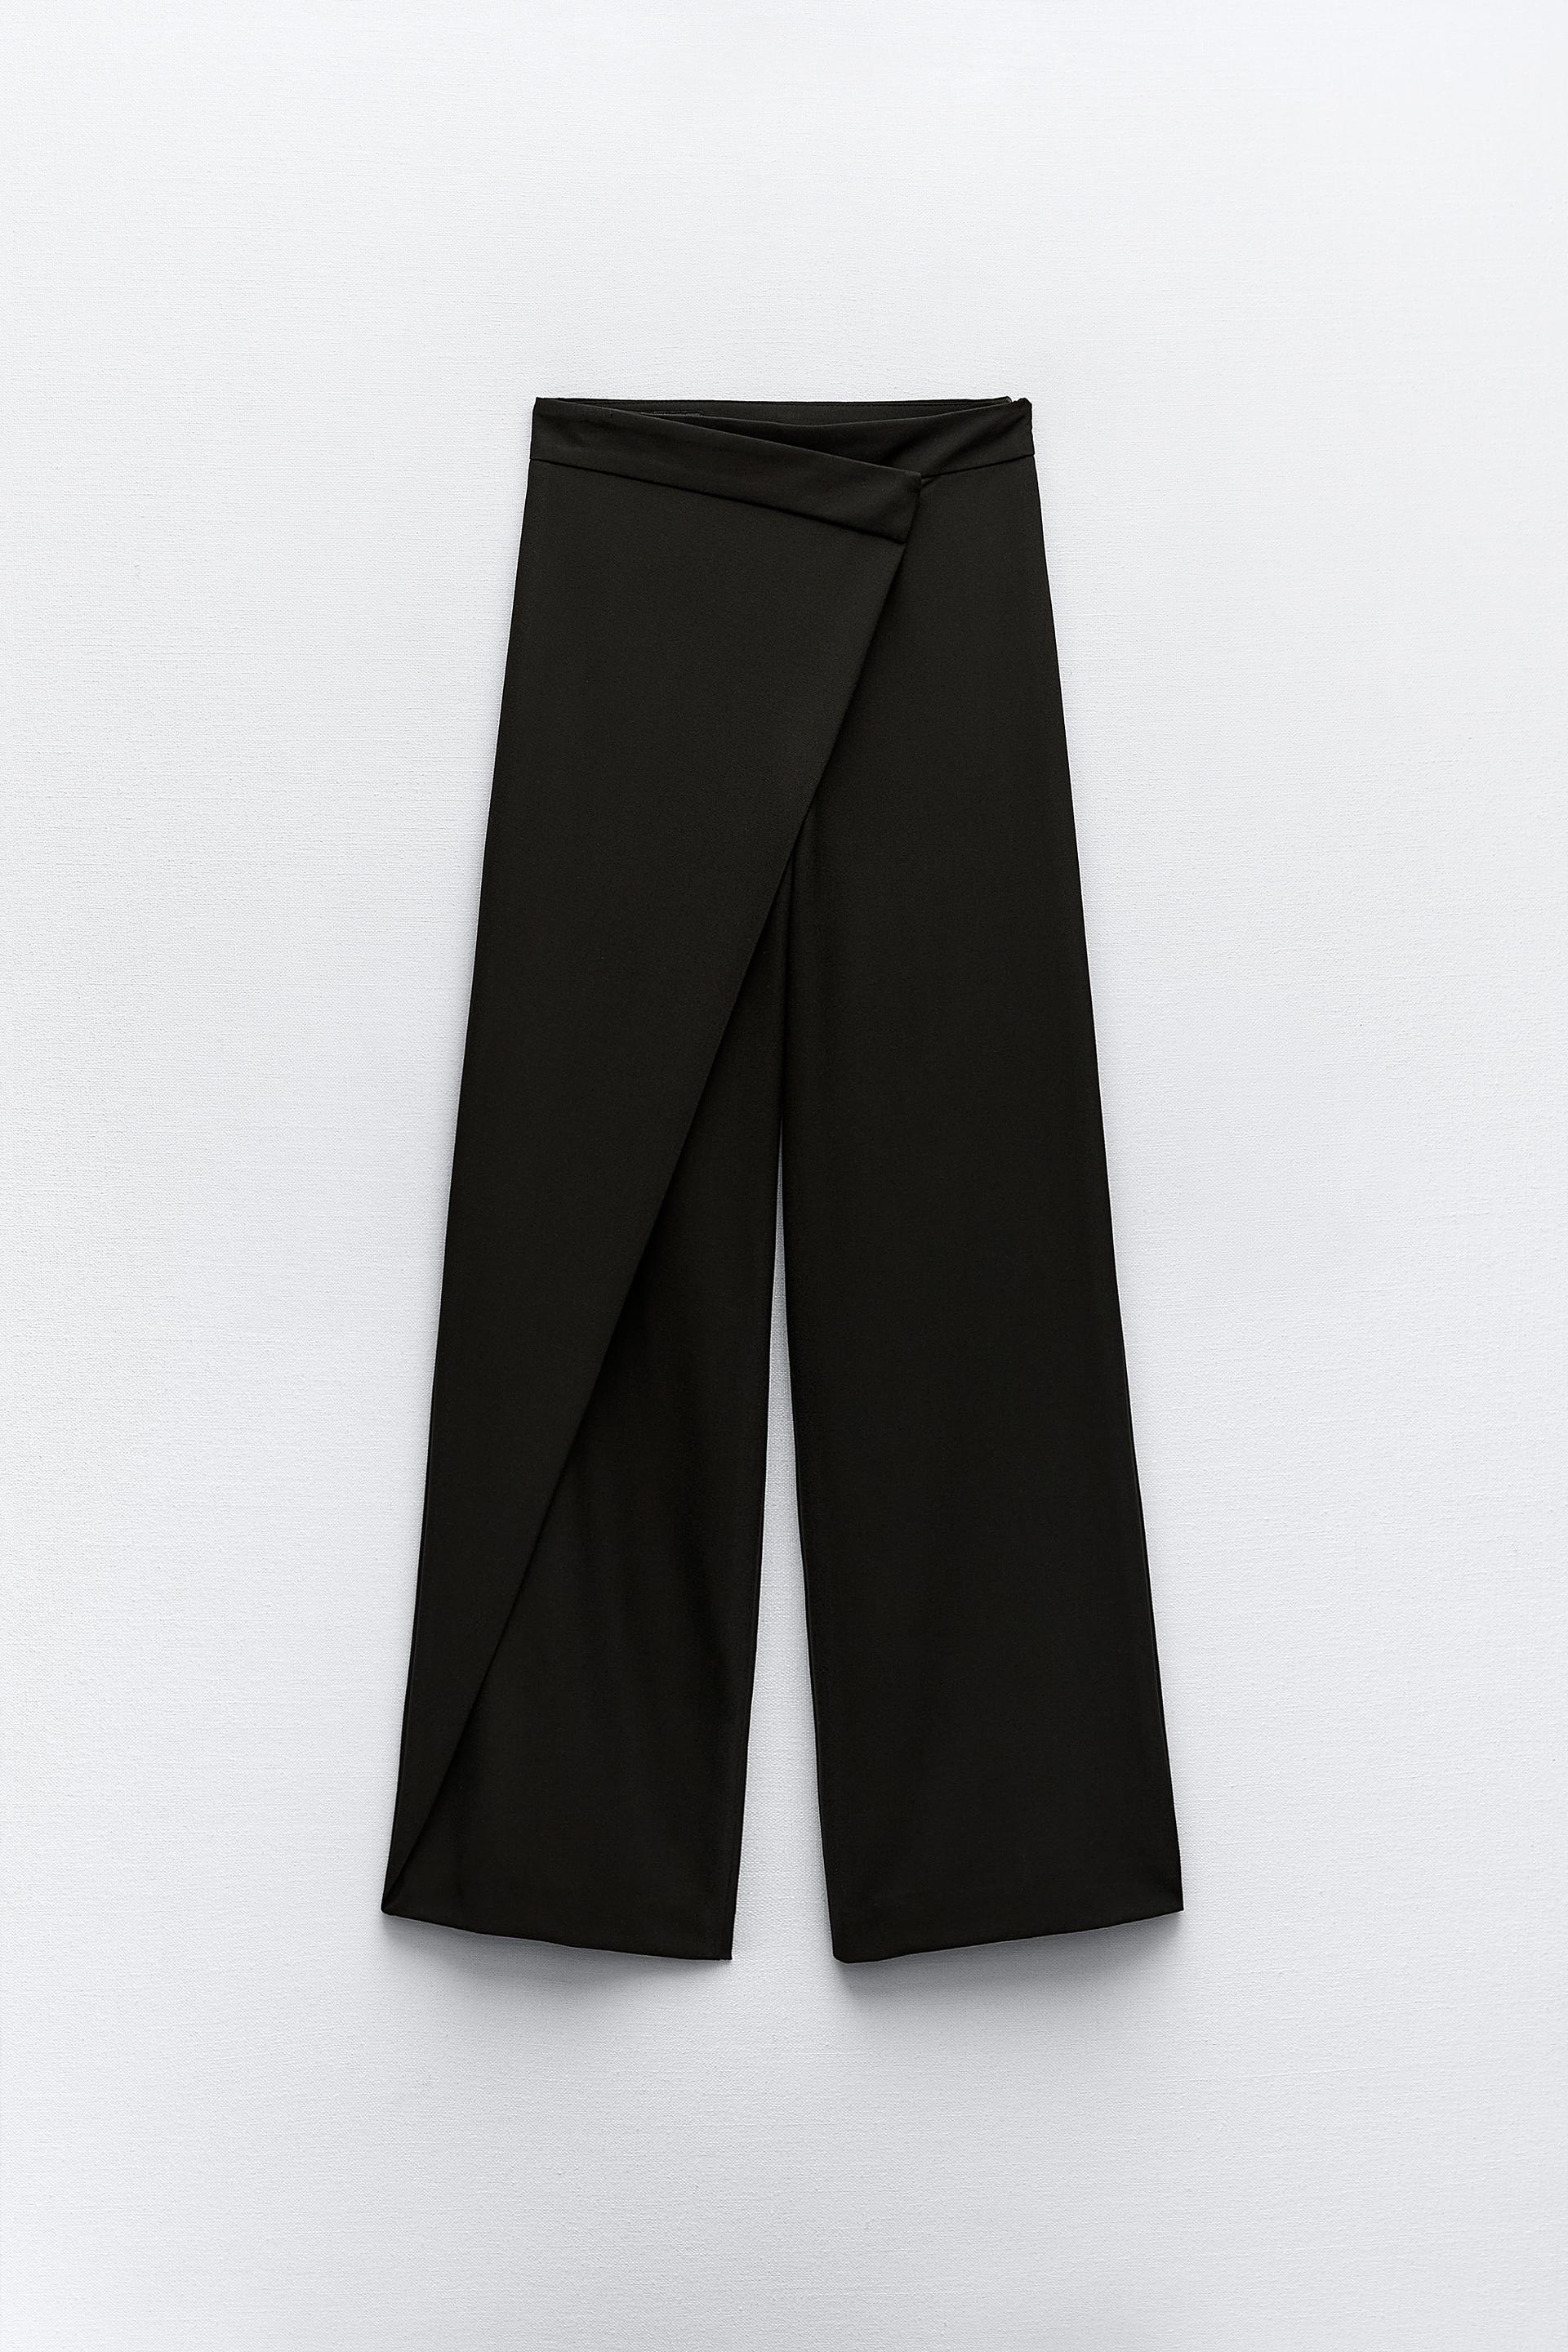 Zara Pants Womens 5 Basic Collection Black Dress Bottoms Trousers